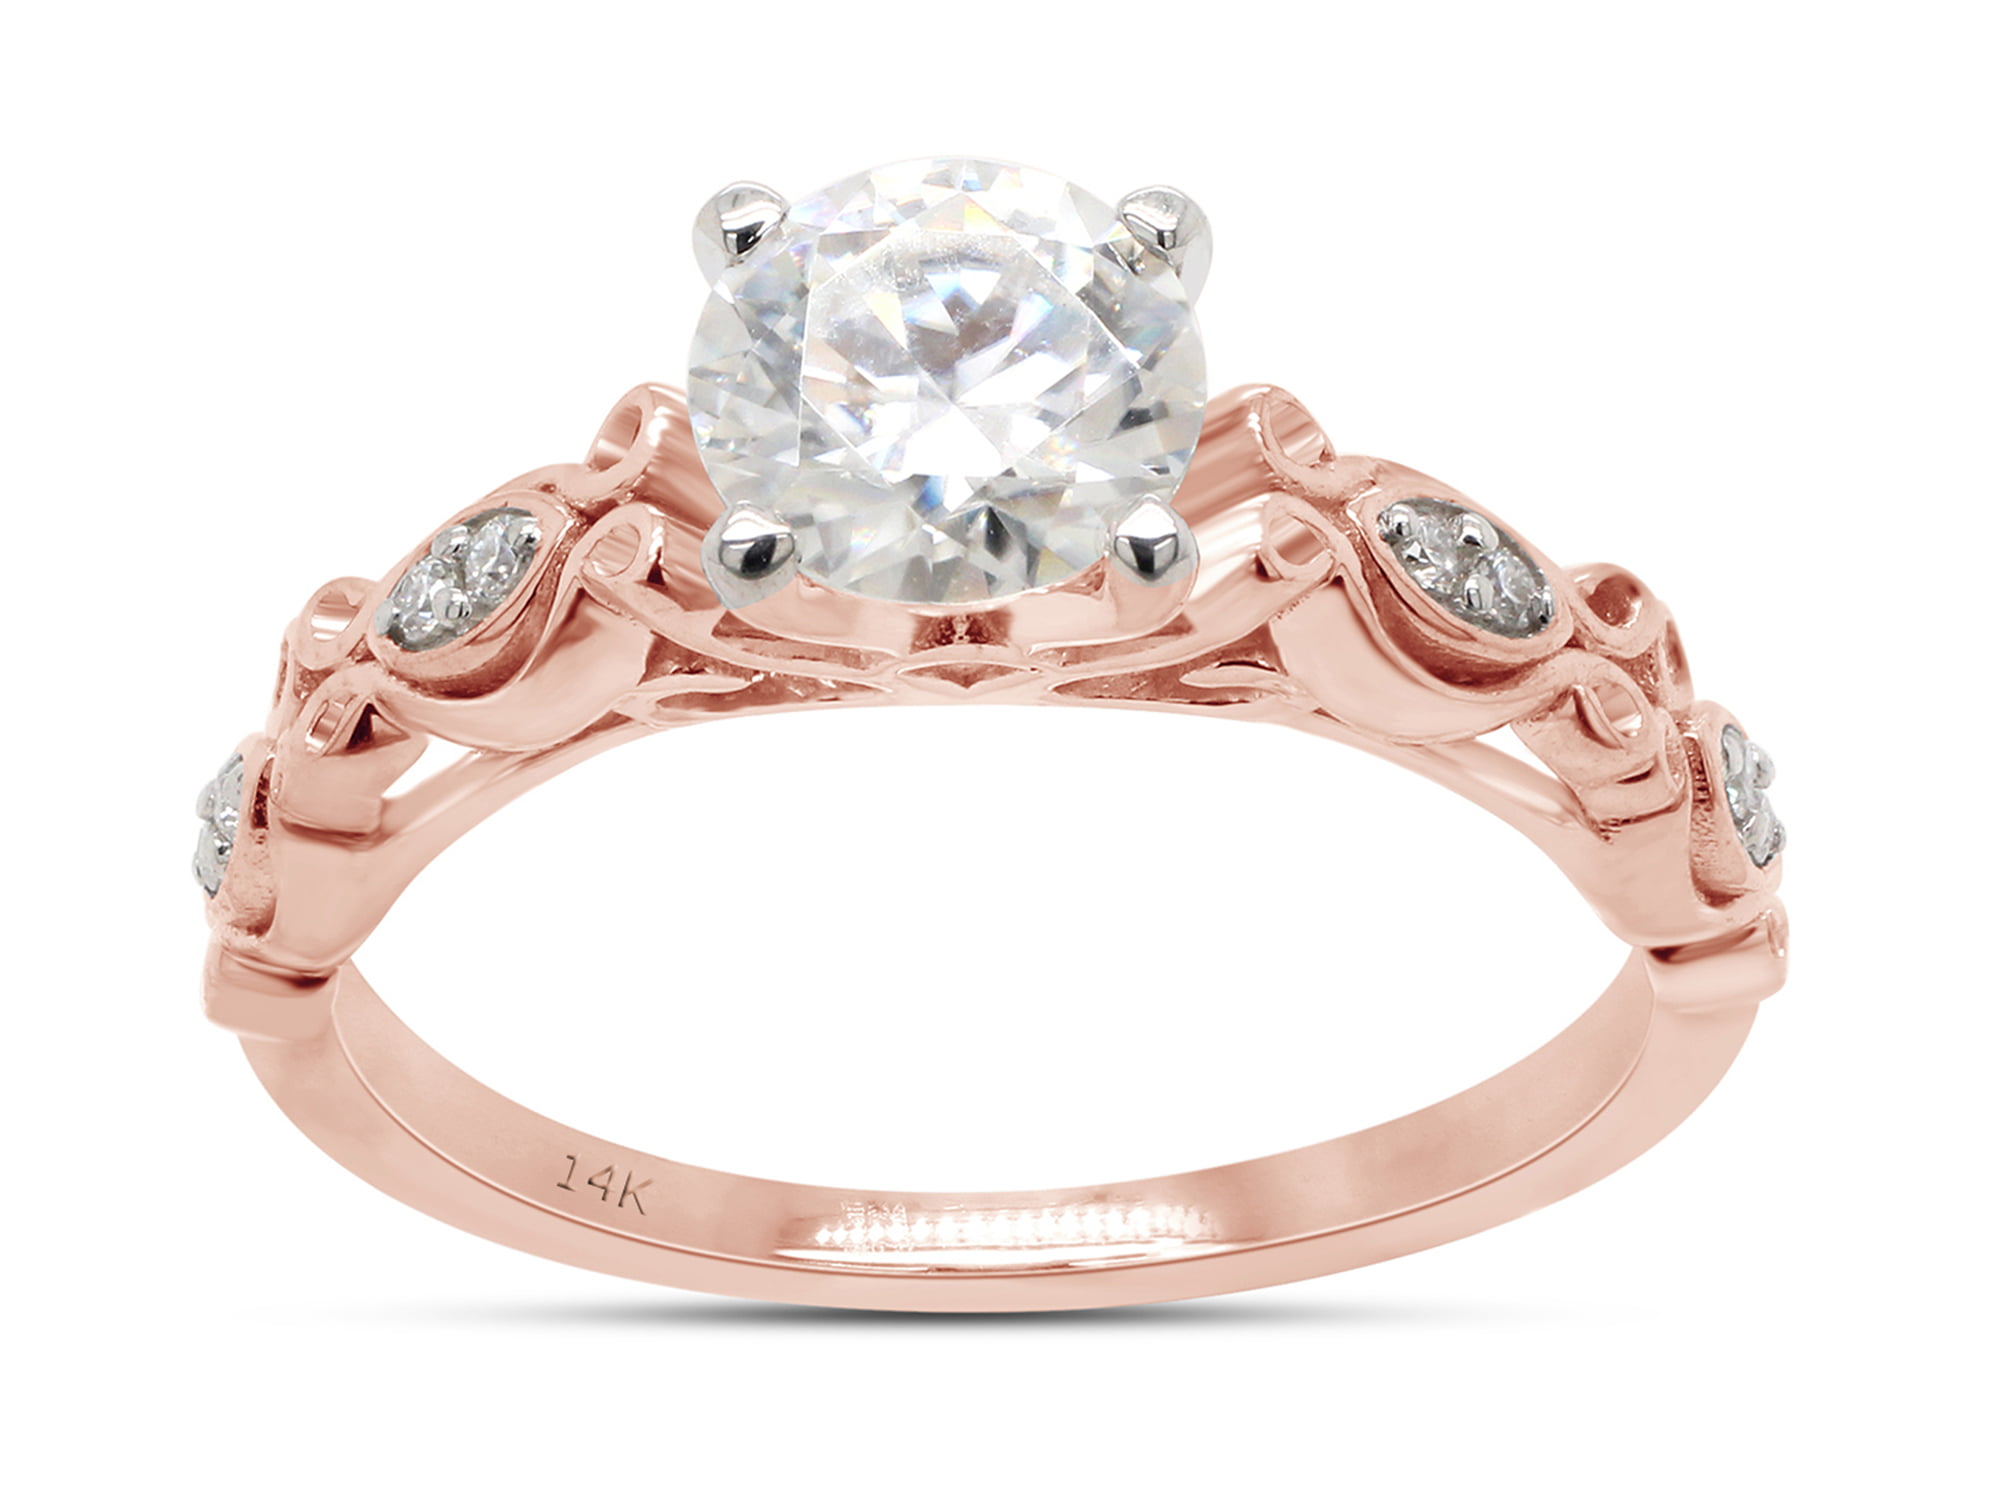 14K White Gold Over D/VVS1 Round Cut Filigree Engagement Wedding Ring Size 7